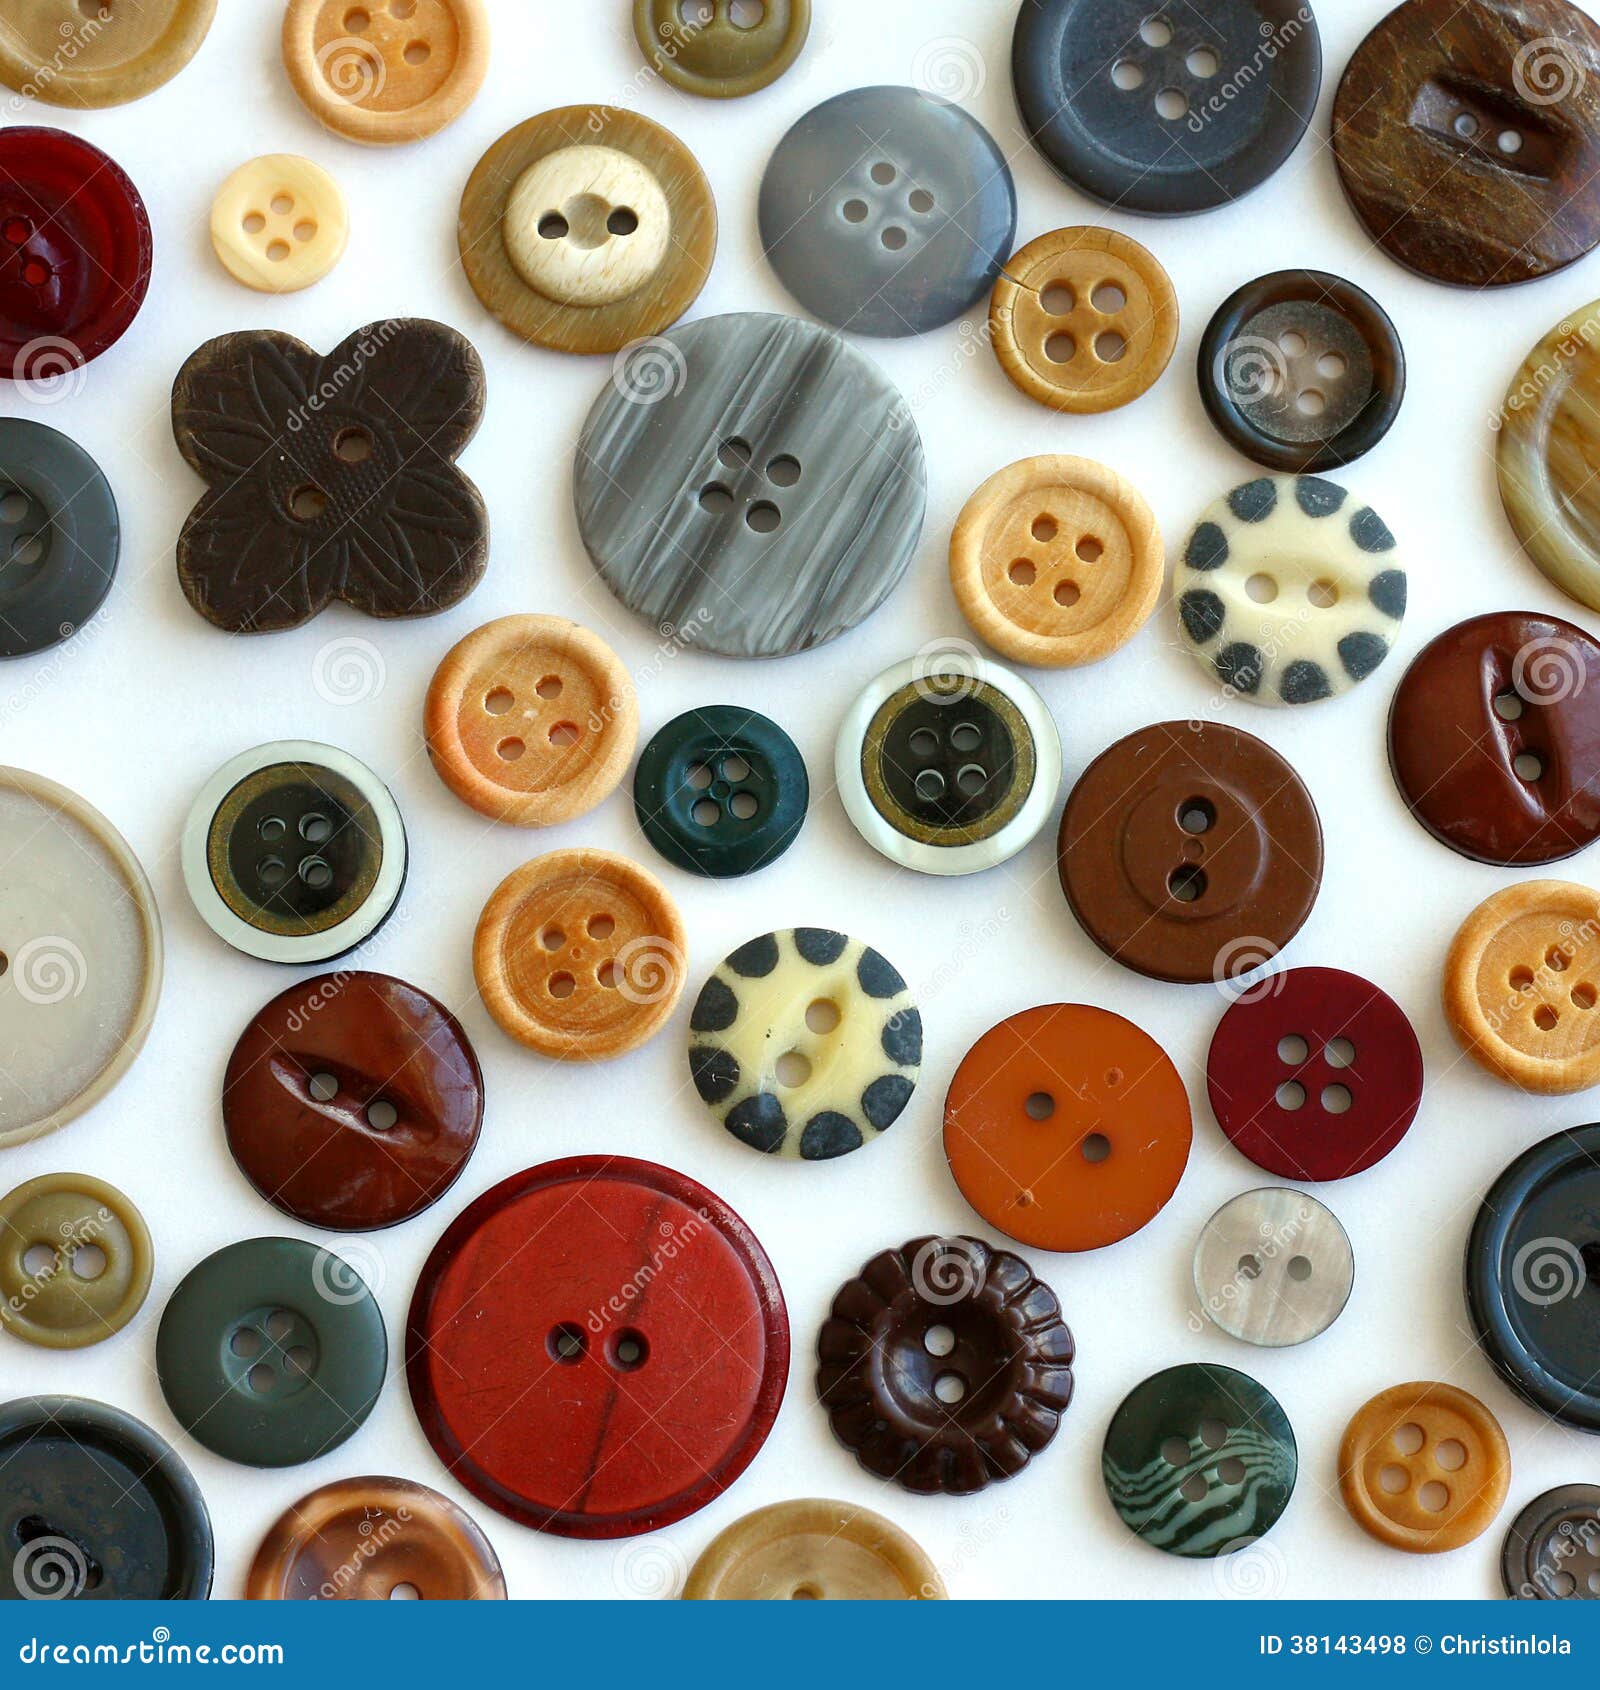 Vintage Button Collection 117